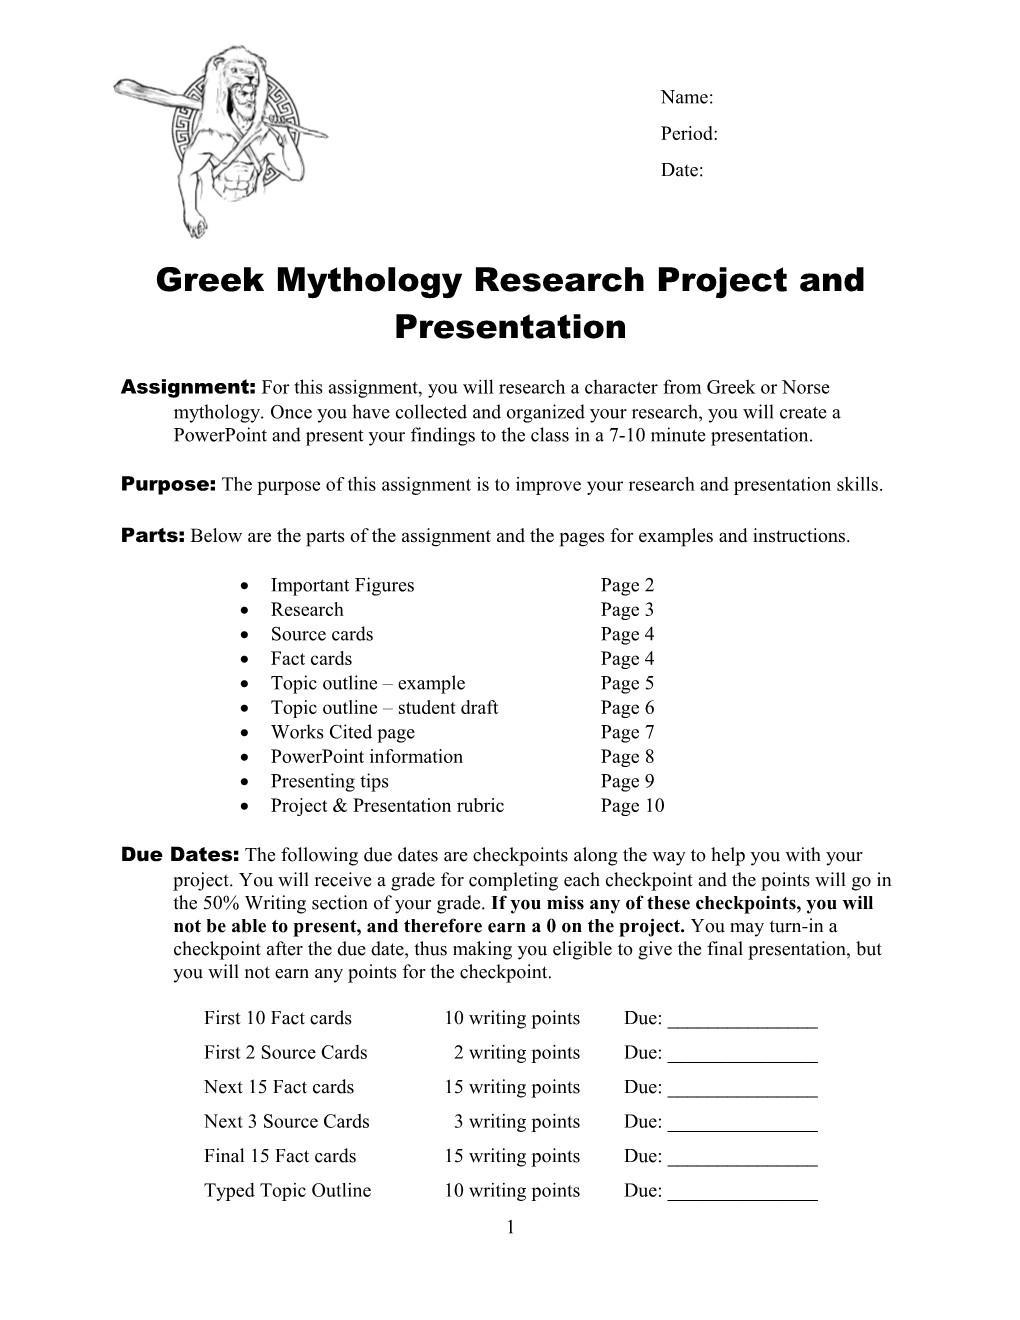 Greek Mythology Research Project and Presentation